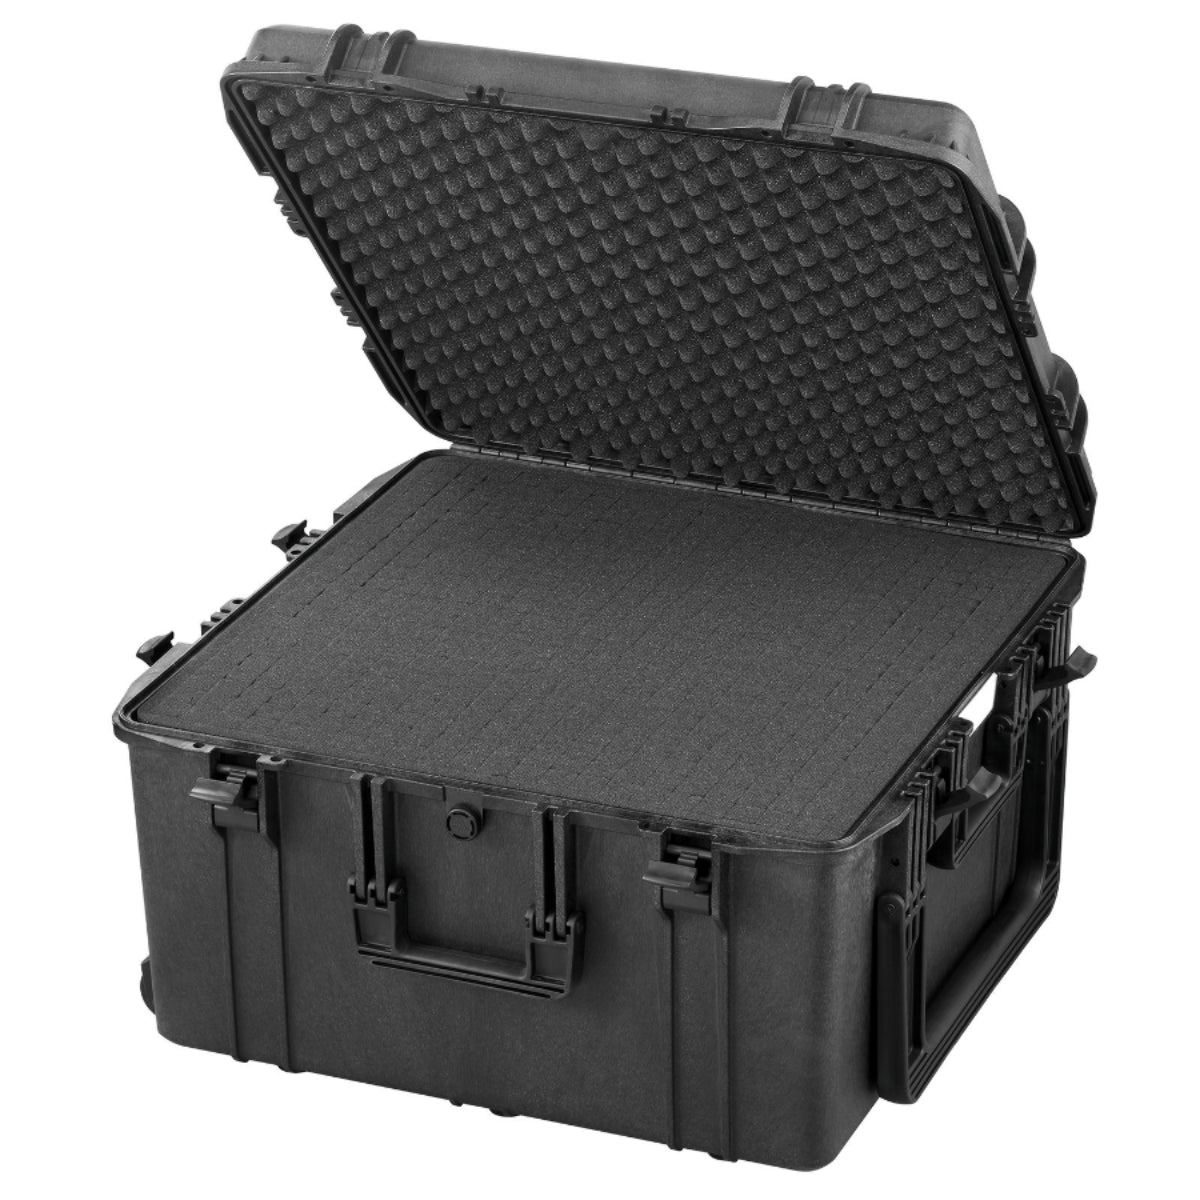 SP PRO 615STR Black Trolley Case, Cubed Foams, ID: L615xW615xH360mm